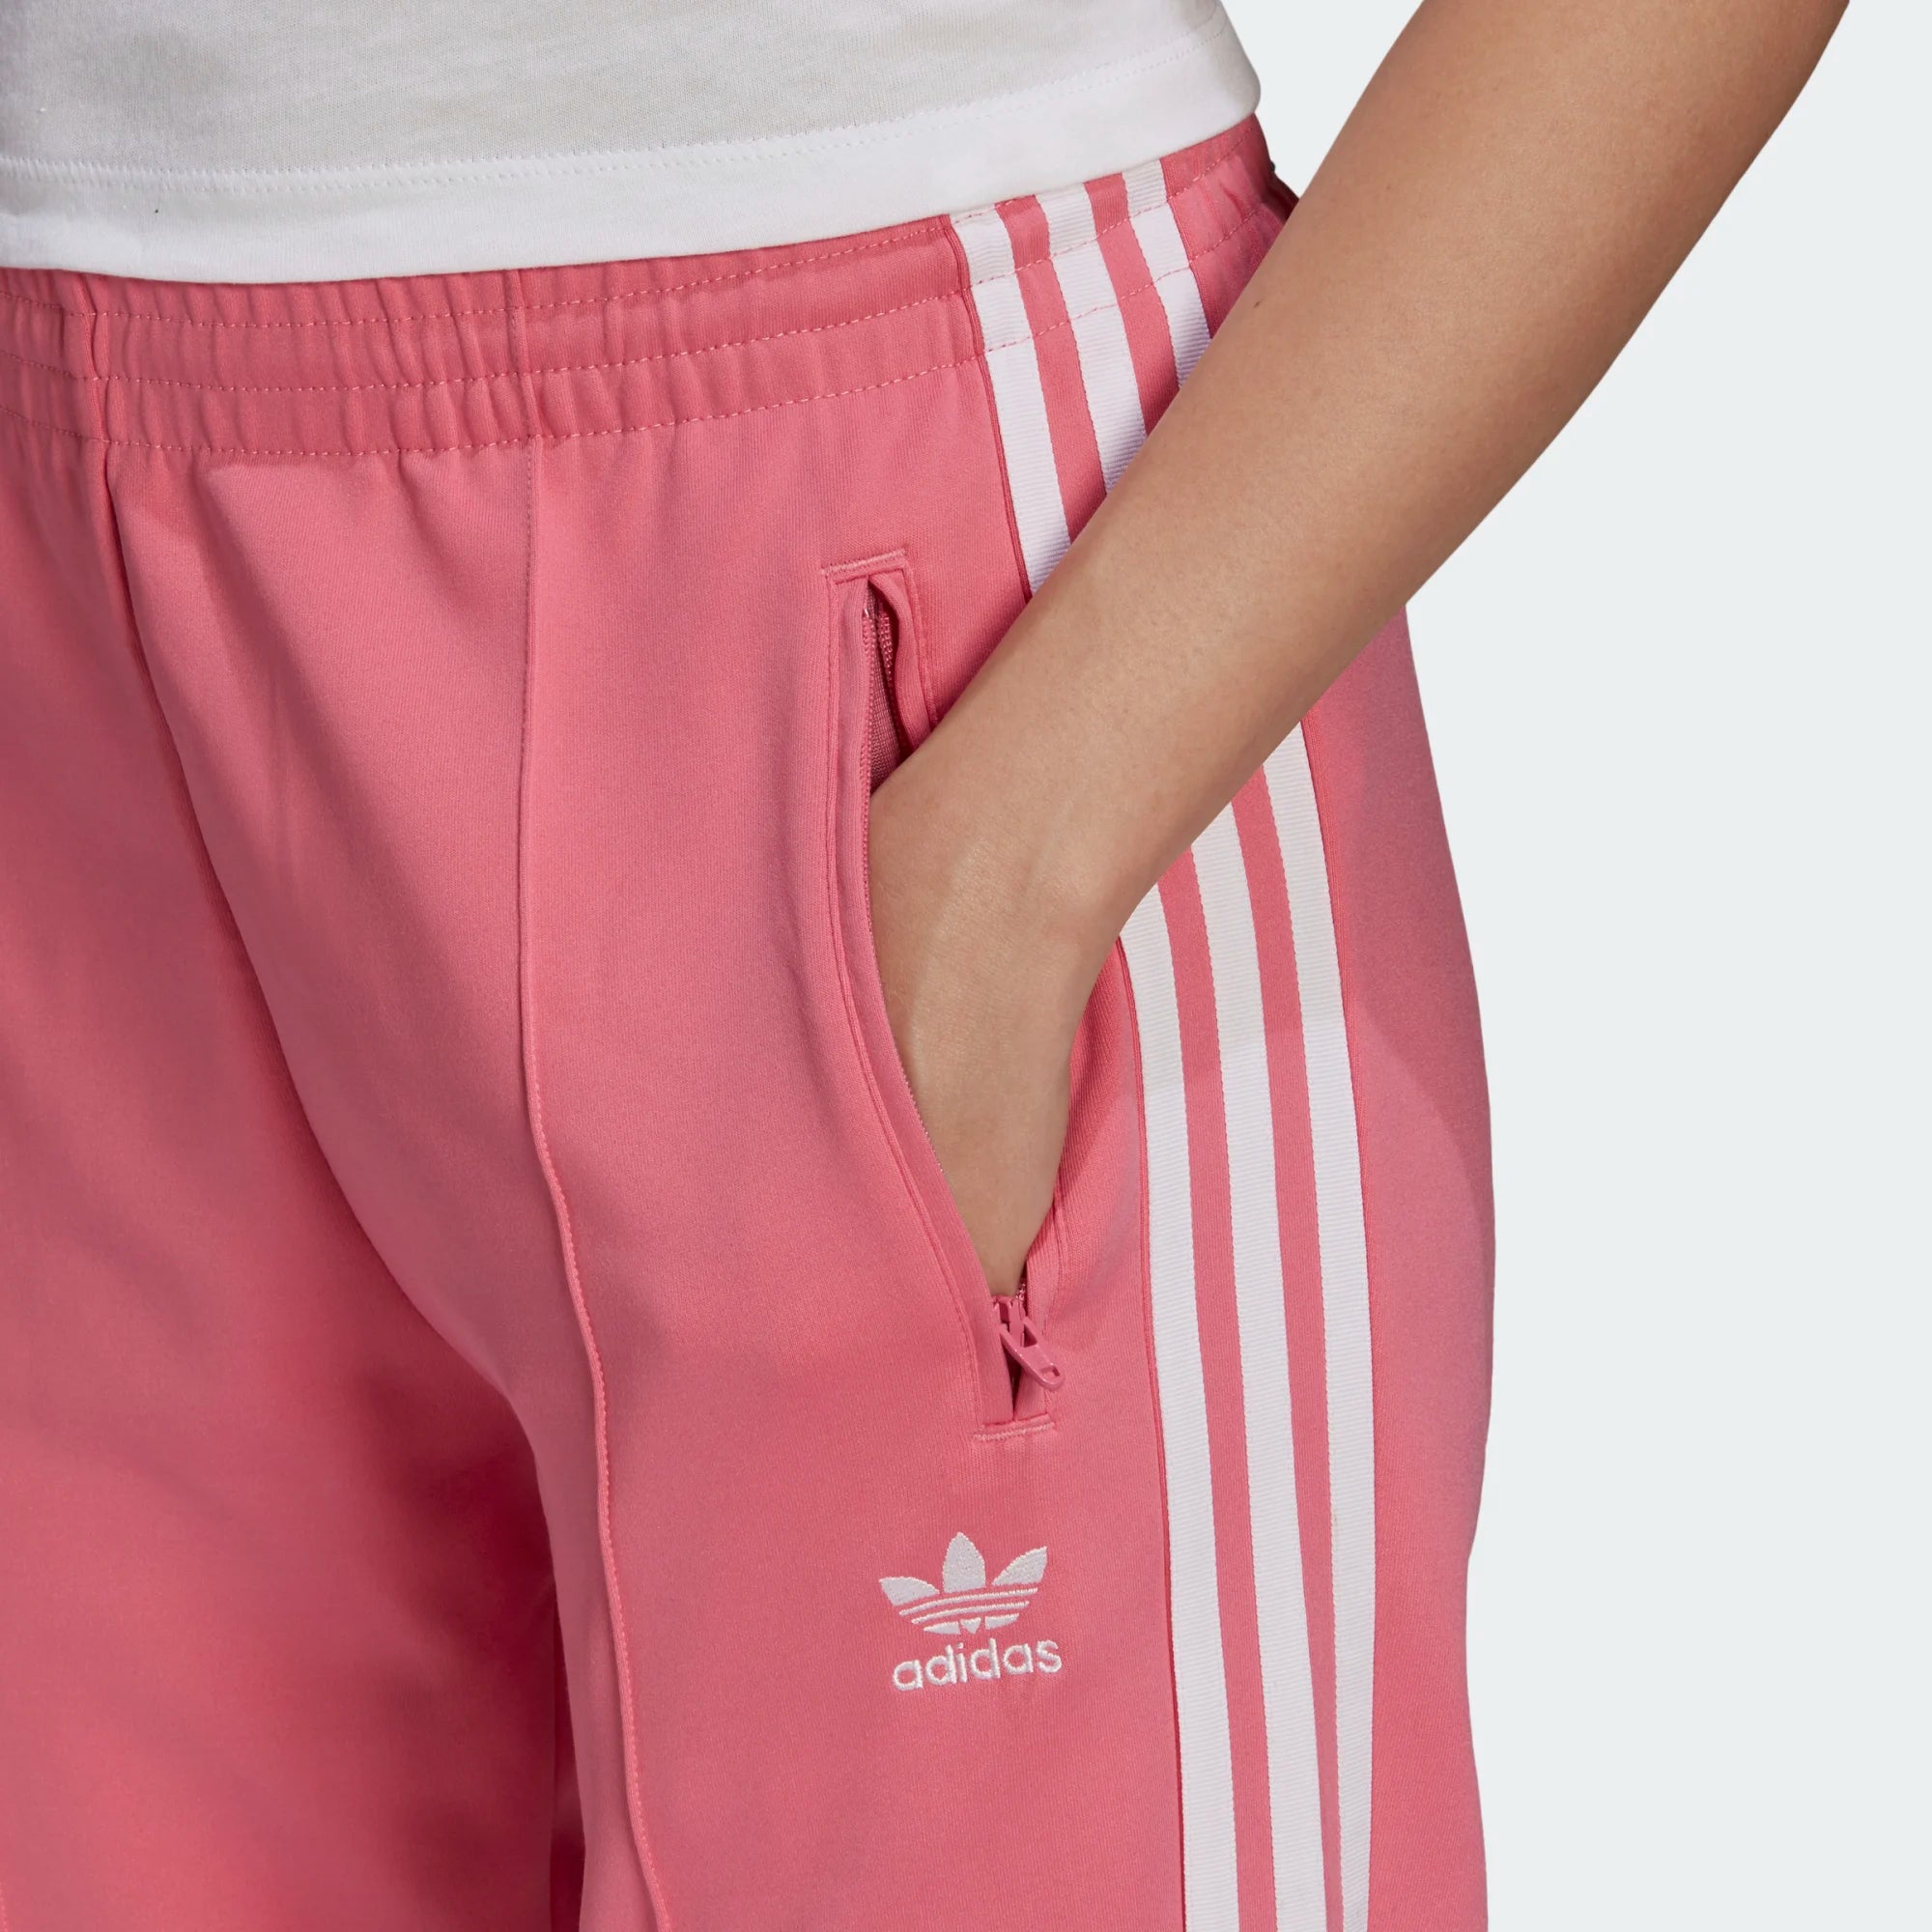 tradesports.co.uk Adidas Women's Supertar Track Pants Pink Size 14